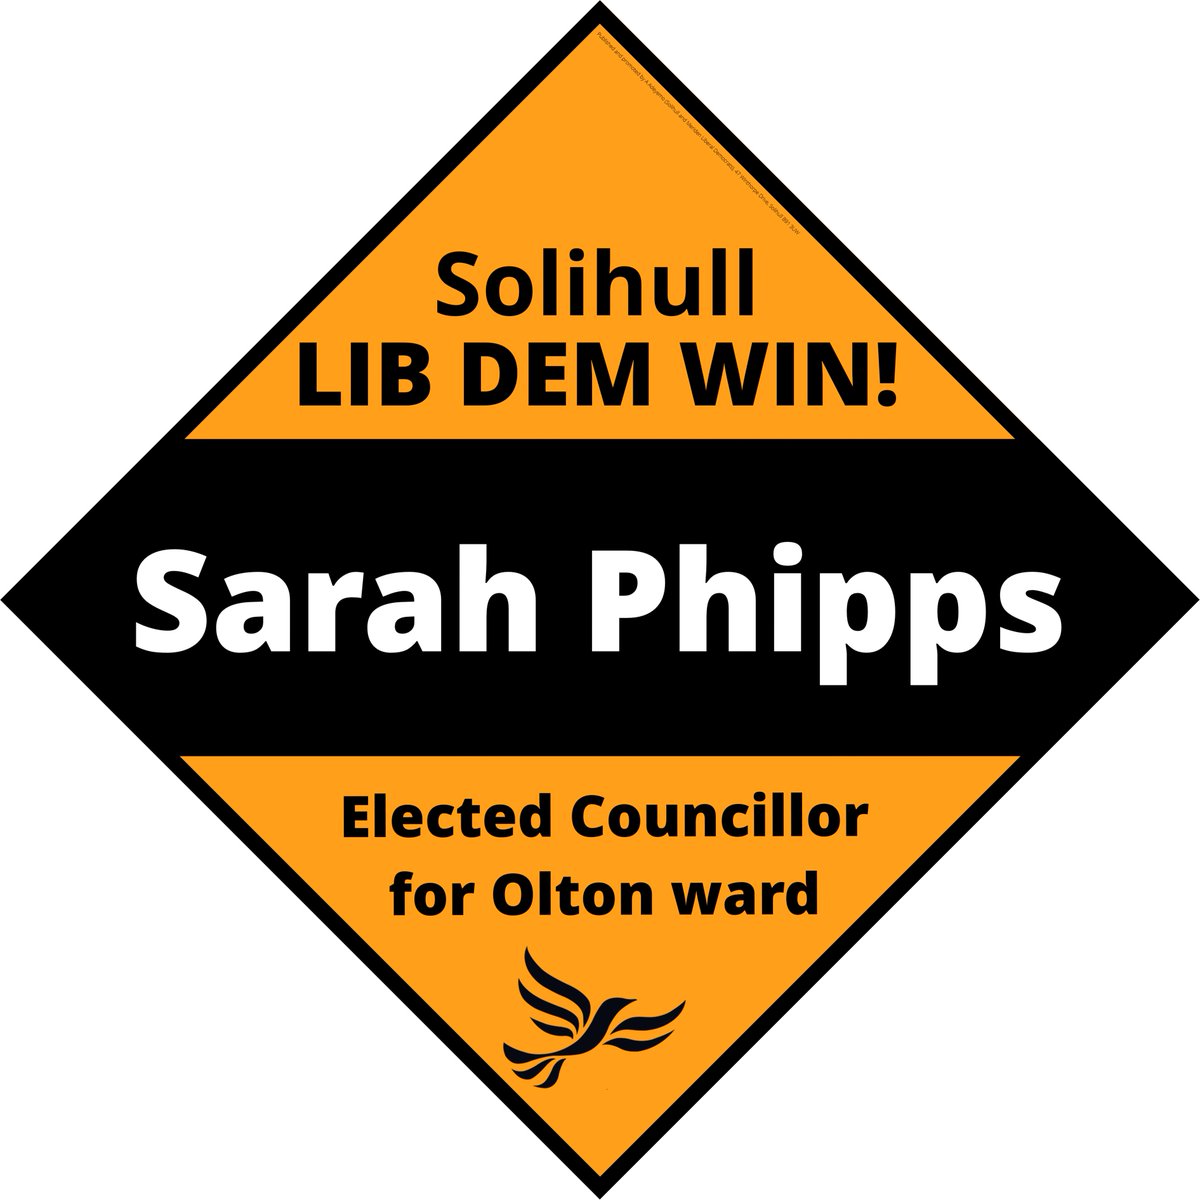 LIB DEM WIN! Congratulations, Sarah Phipps! Elected as Councillor for Olton ward.
@SolihullCouncil #Olton #Solihull #LibDems #WinningHere